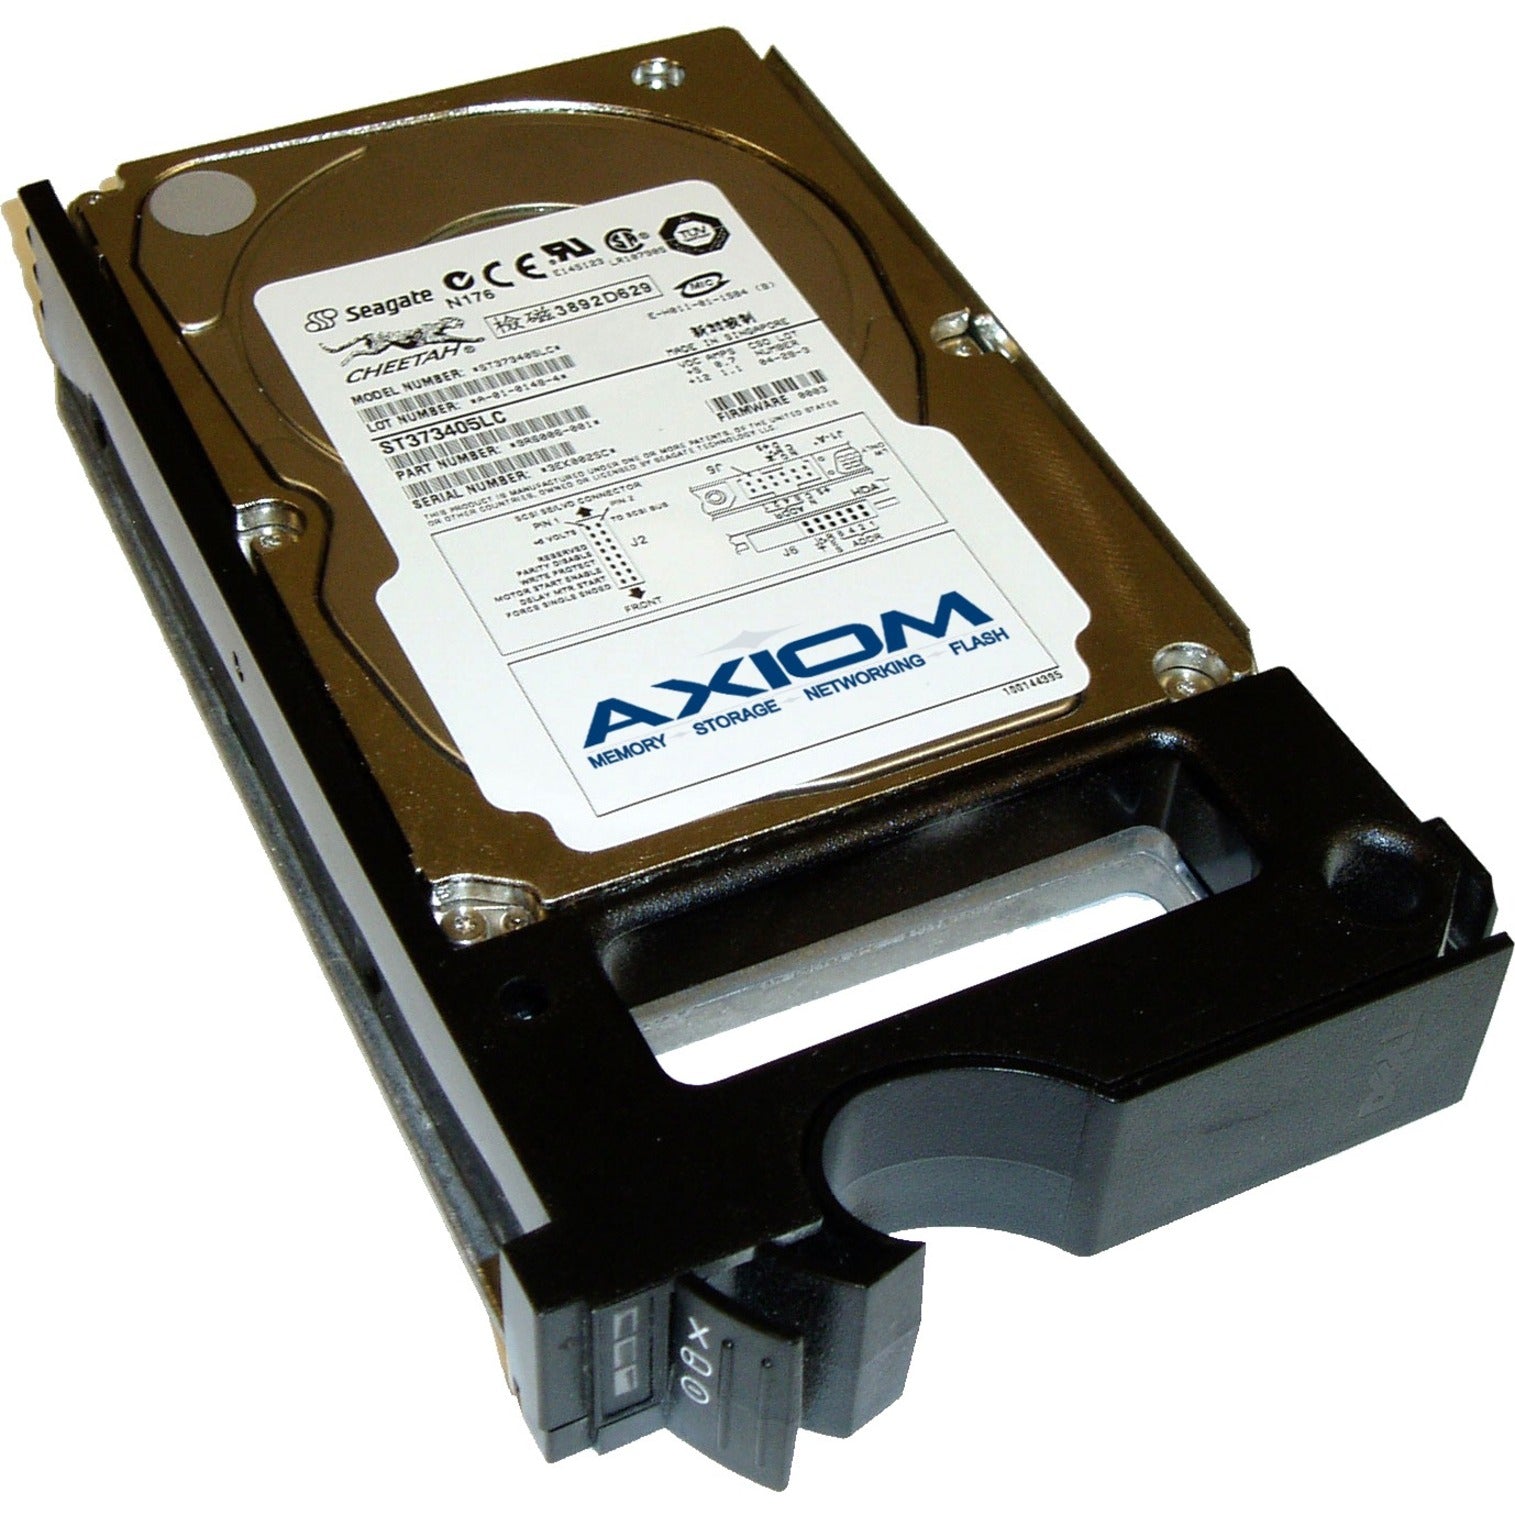 Accortec 67Y1386-ACC Hard Drive 600 GB, 3.5" Internal, SAS (6Gb/s SAS)